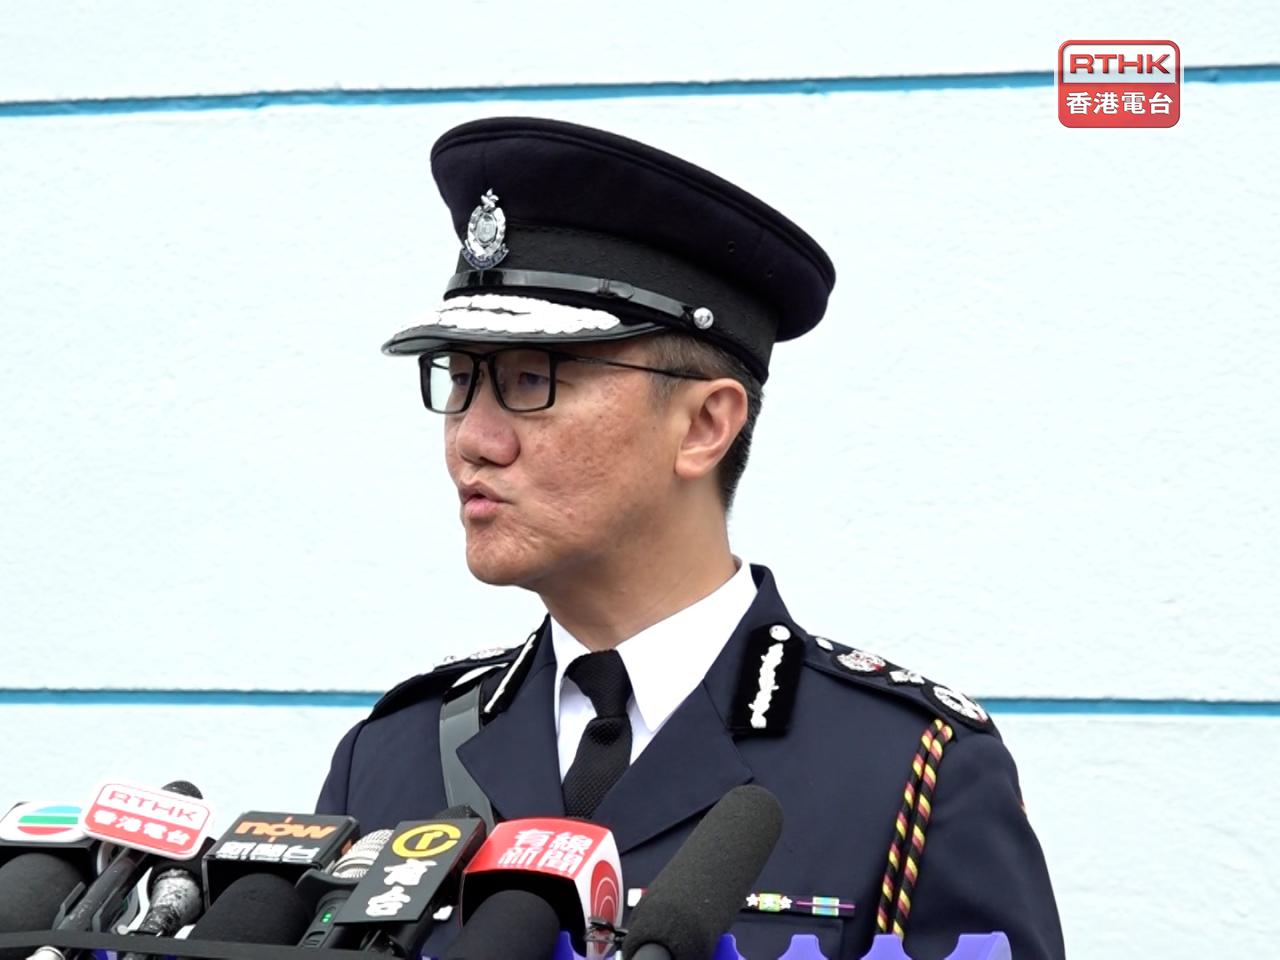 Police Commissioner praises Mong Kok CCTV cameras